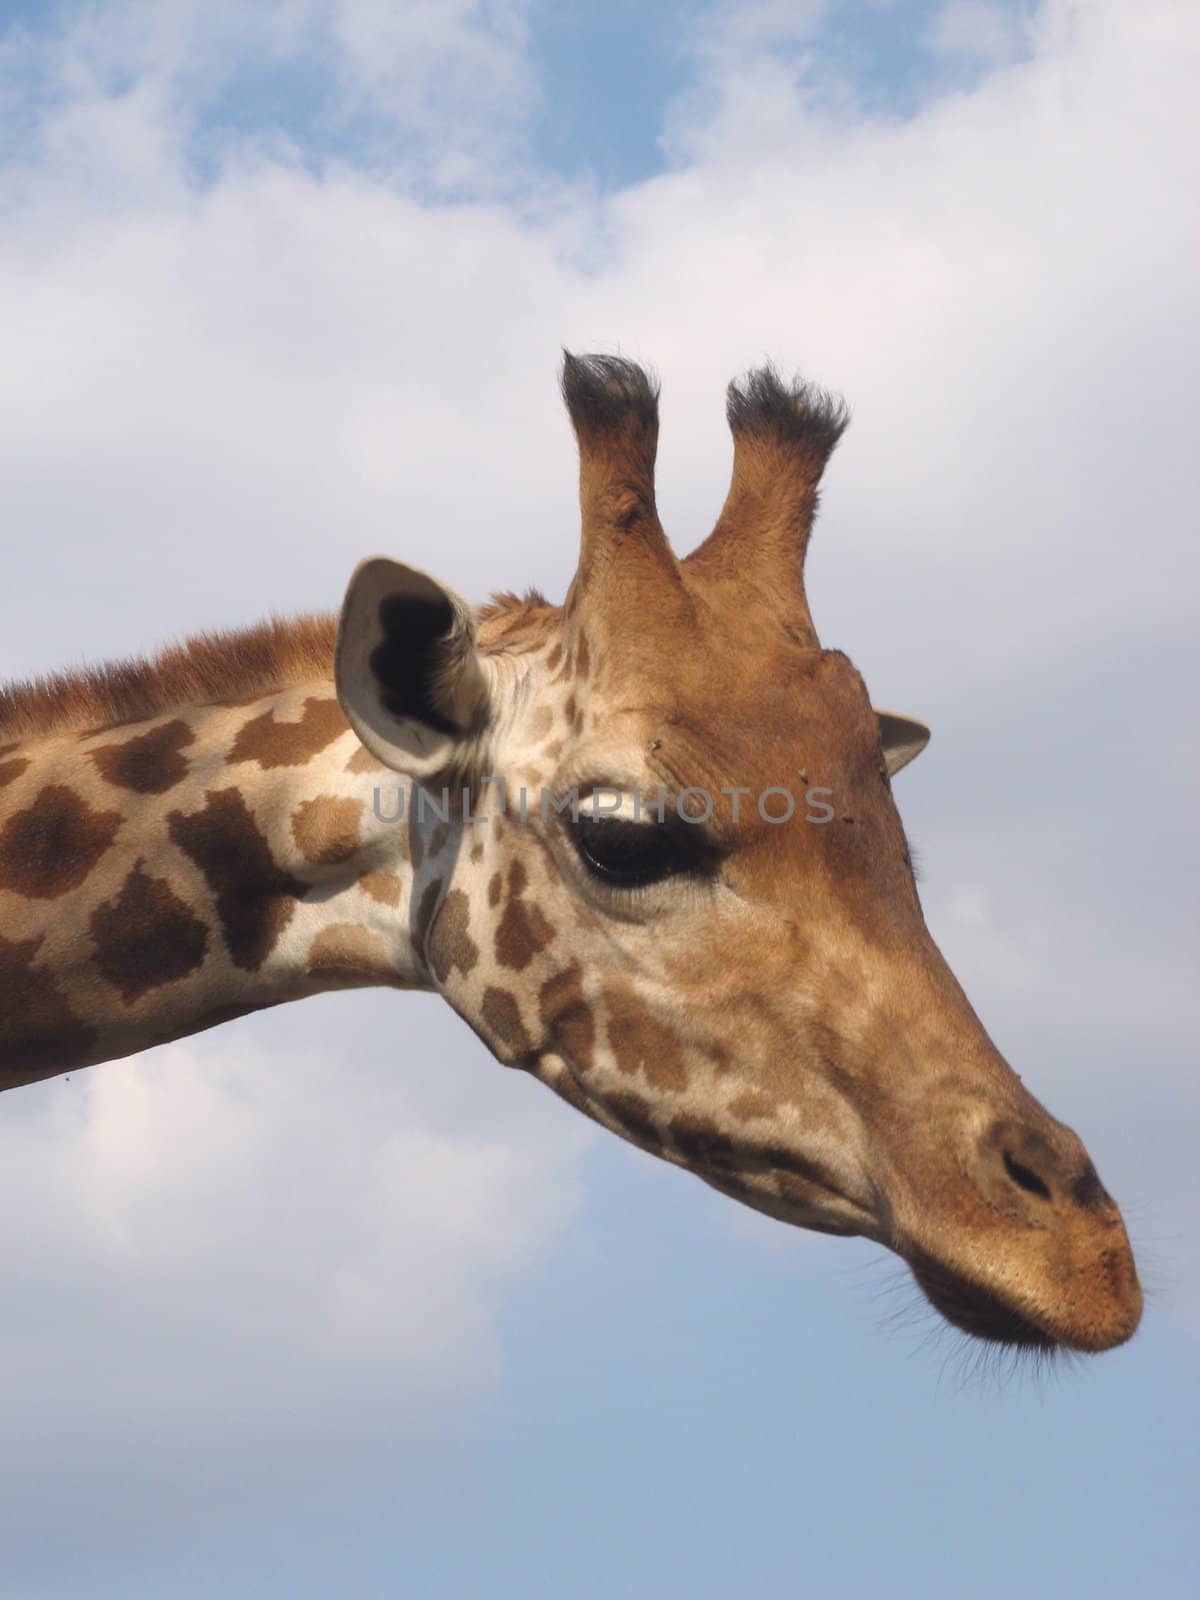 over a blue sky background the giraffe's head